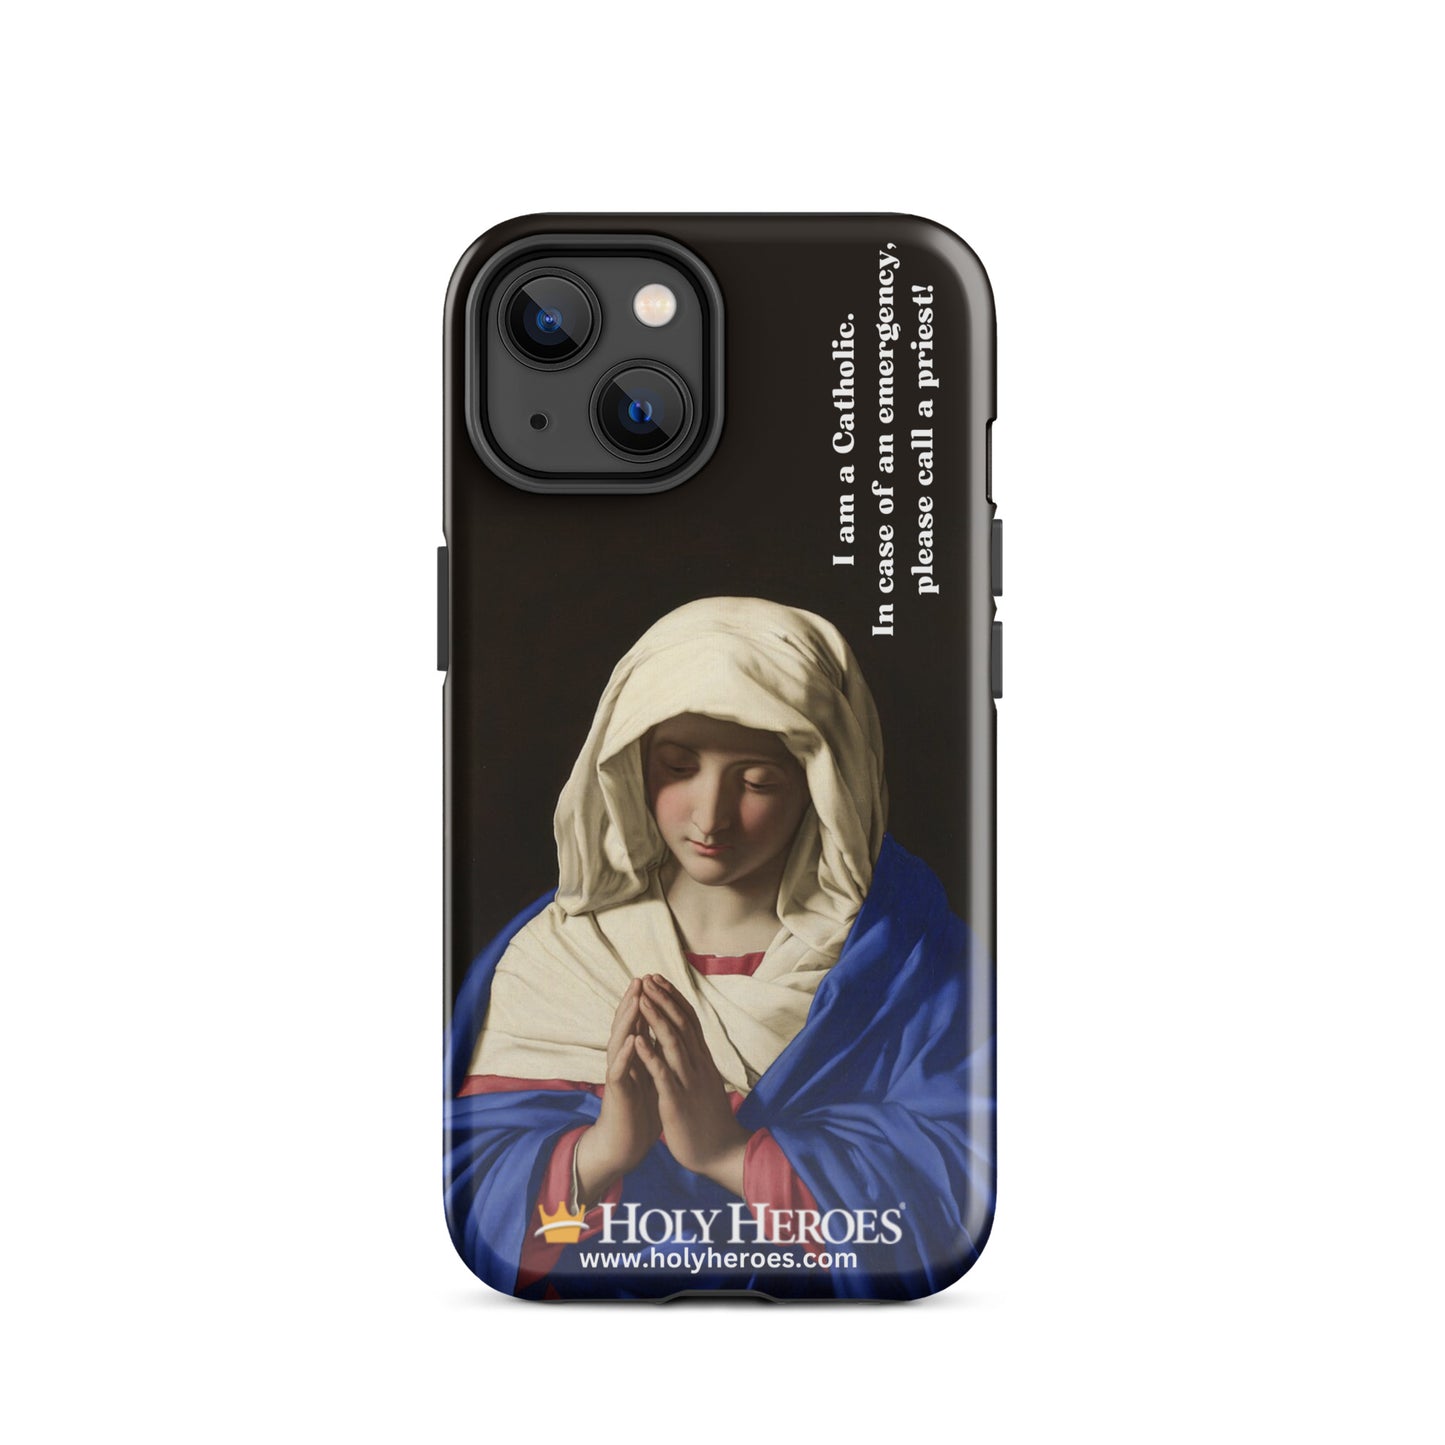 Praying Virgin Mary "I am a Catholic" Tough Case for iPhone®